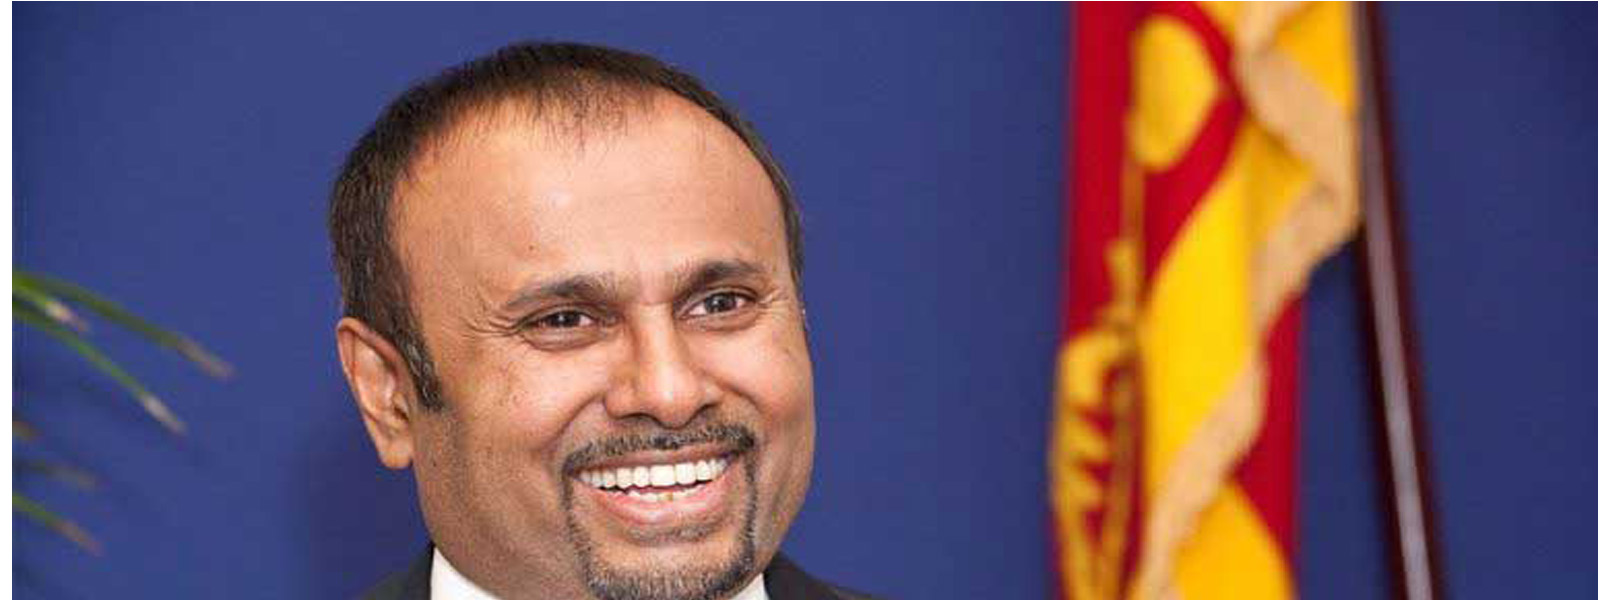 Ex-Ambassador says arrest politically motivated